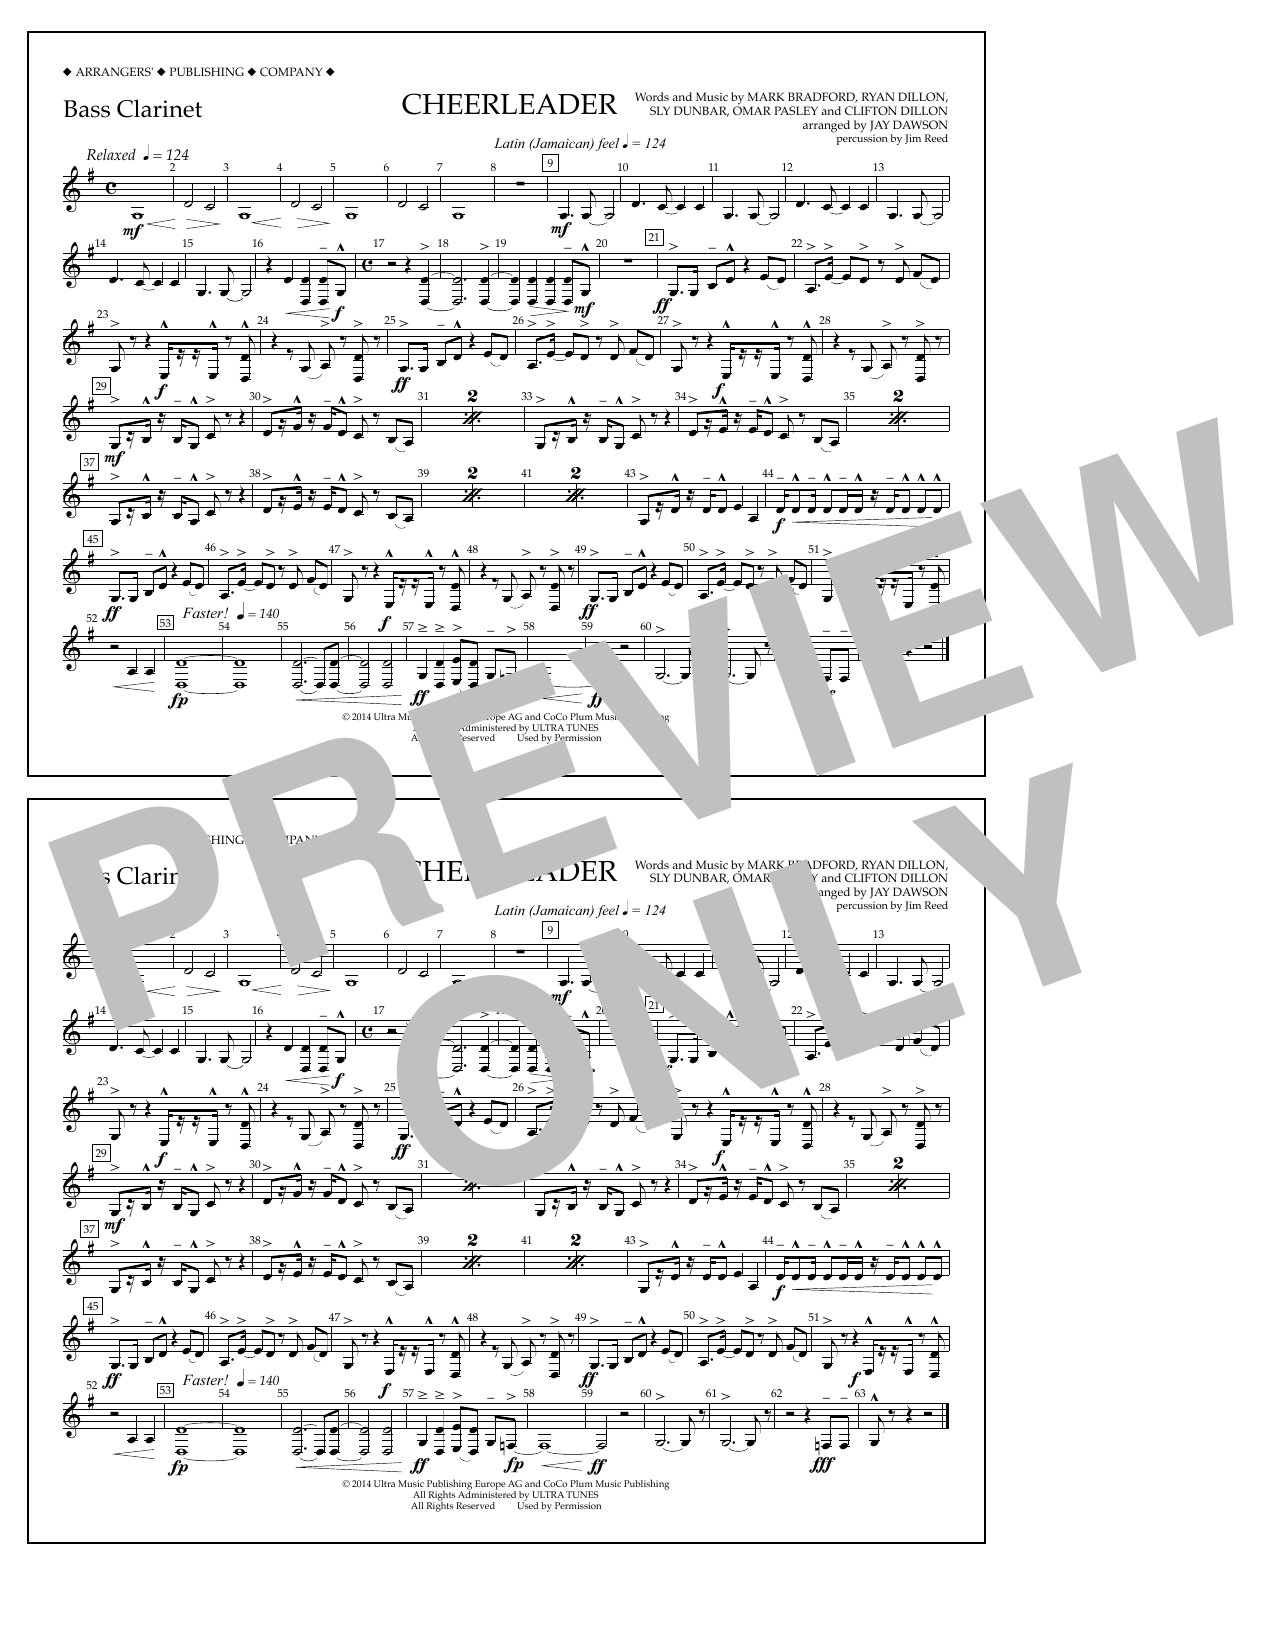 Jay Dawson Cheerleader - Bass Clarinet Sheet Music Notes & Chords for Marching Band - Download or Print PDF